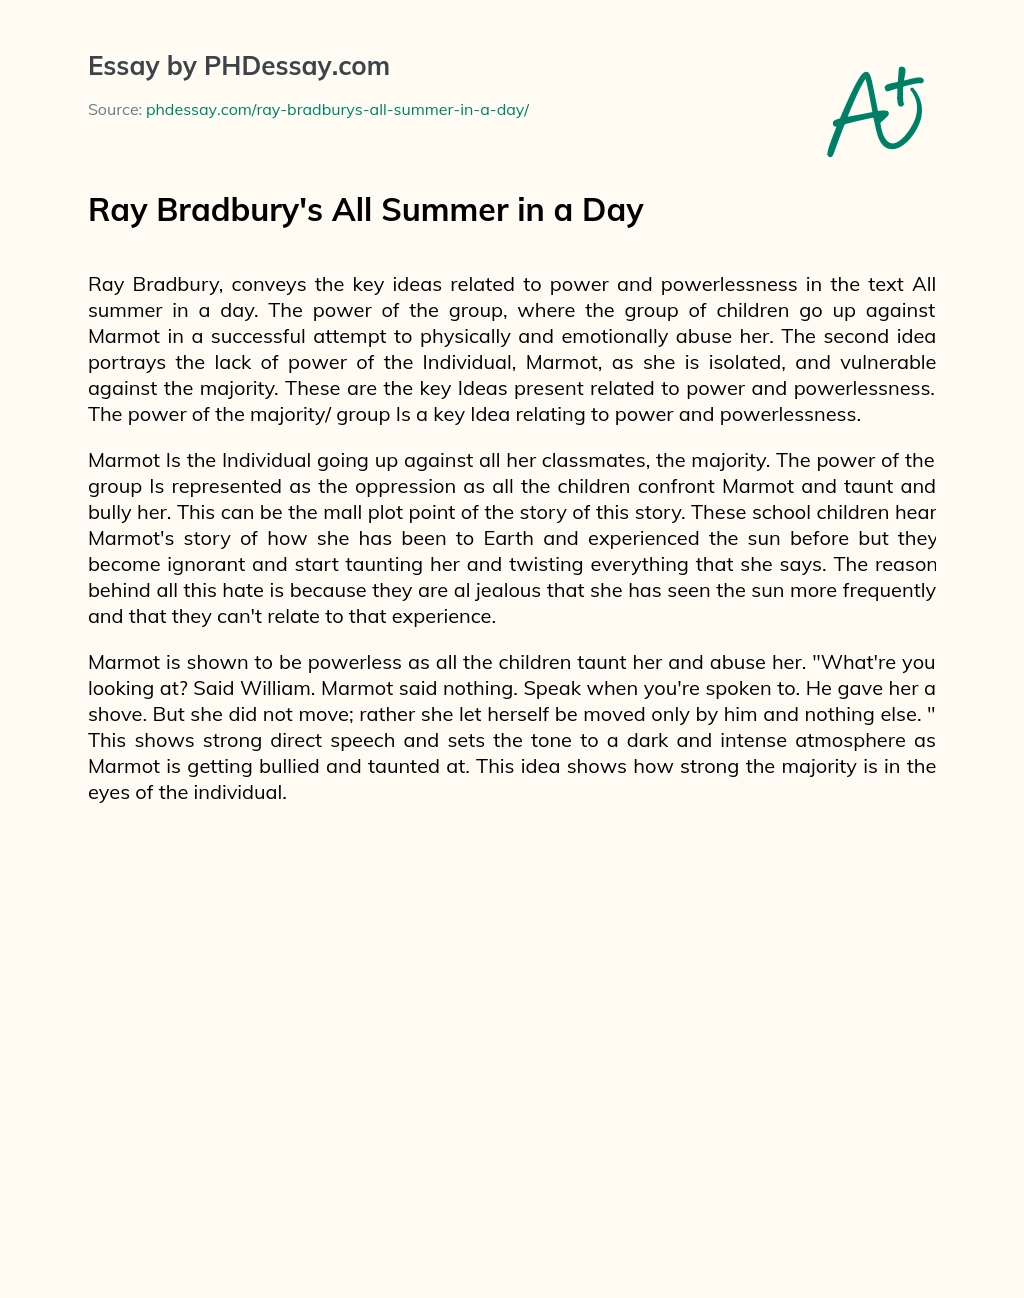 Ray Bradbury’s All Summer in a Day essay